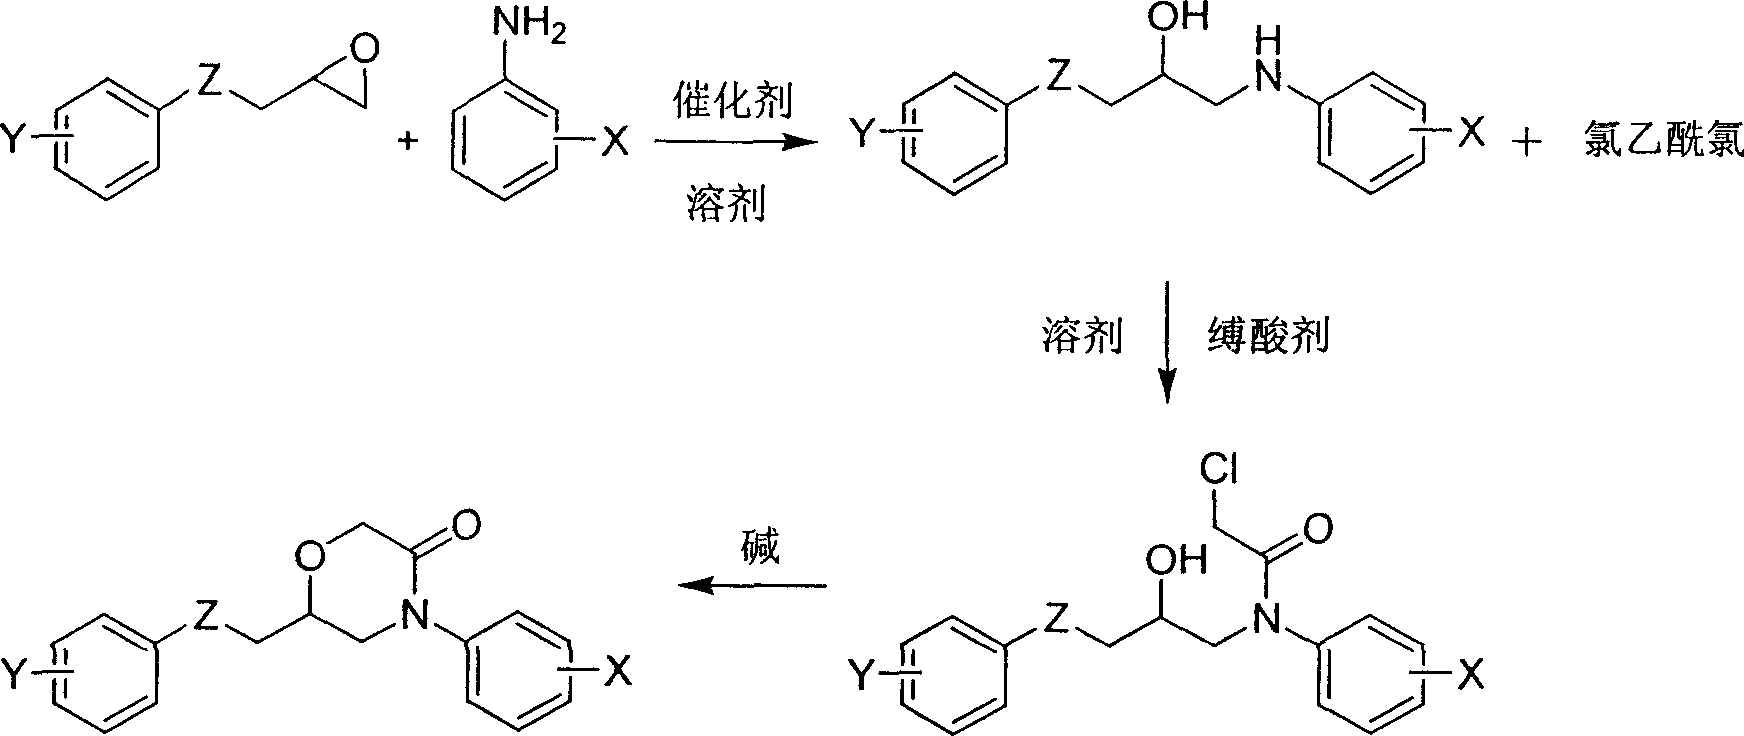 6-aryloxymethyl-4-aryl-3-morpholone derivative and its preparation method